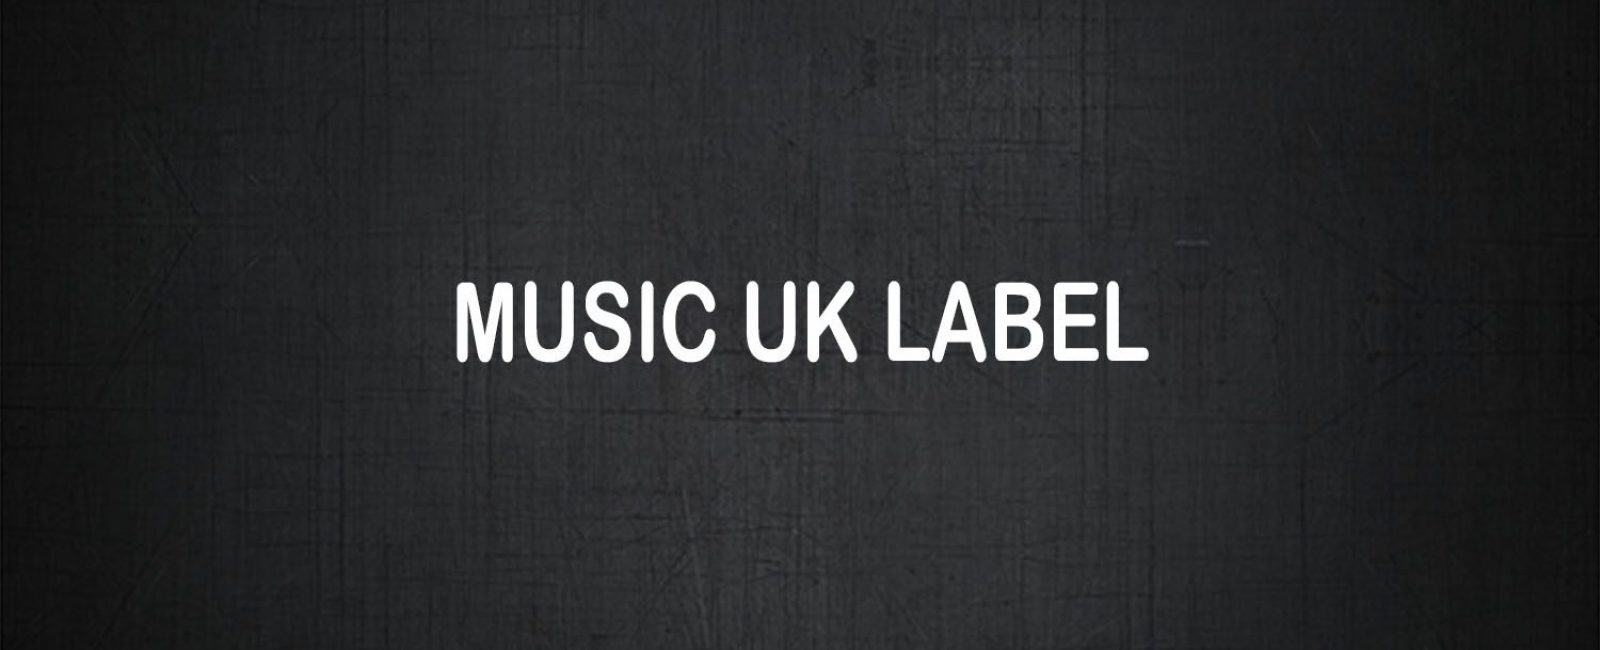 Music UK Label Logo 2020v2